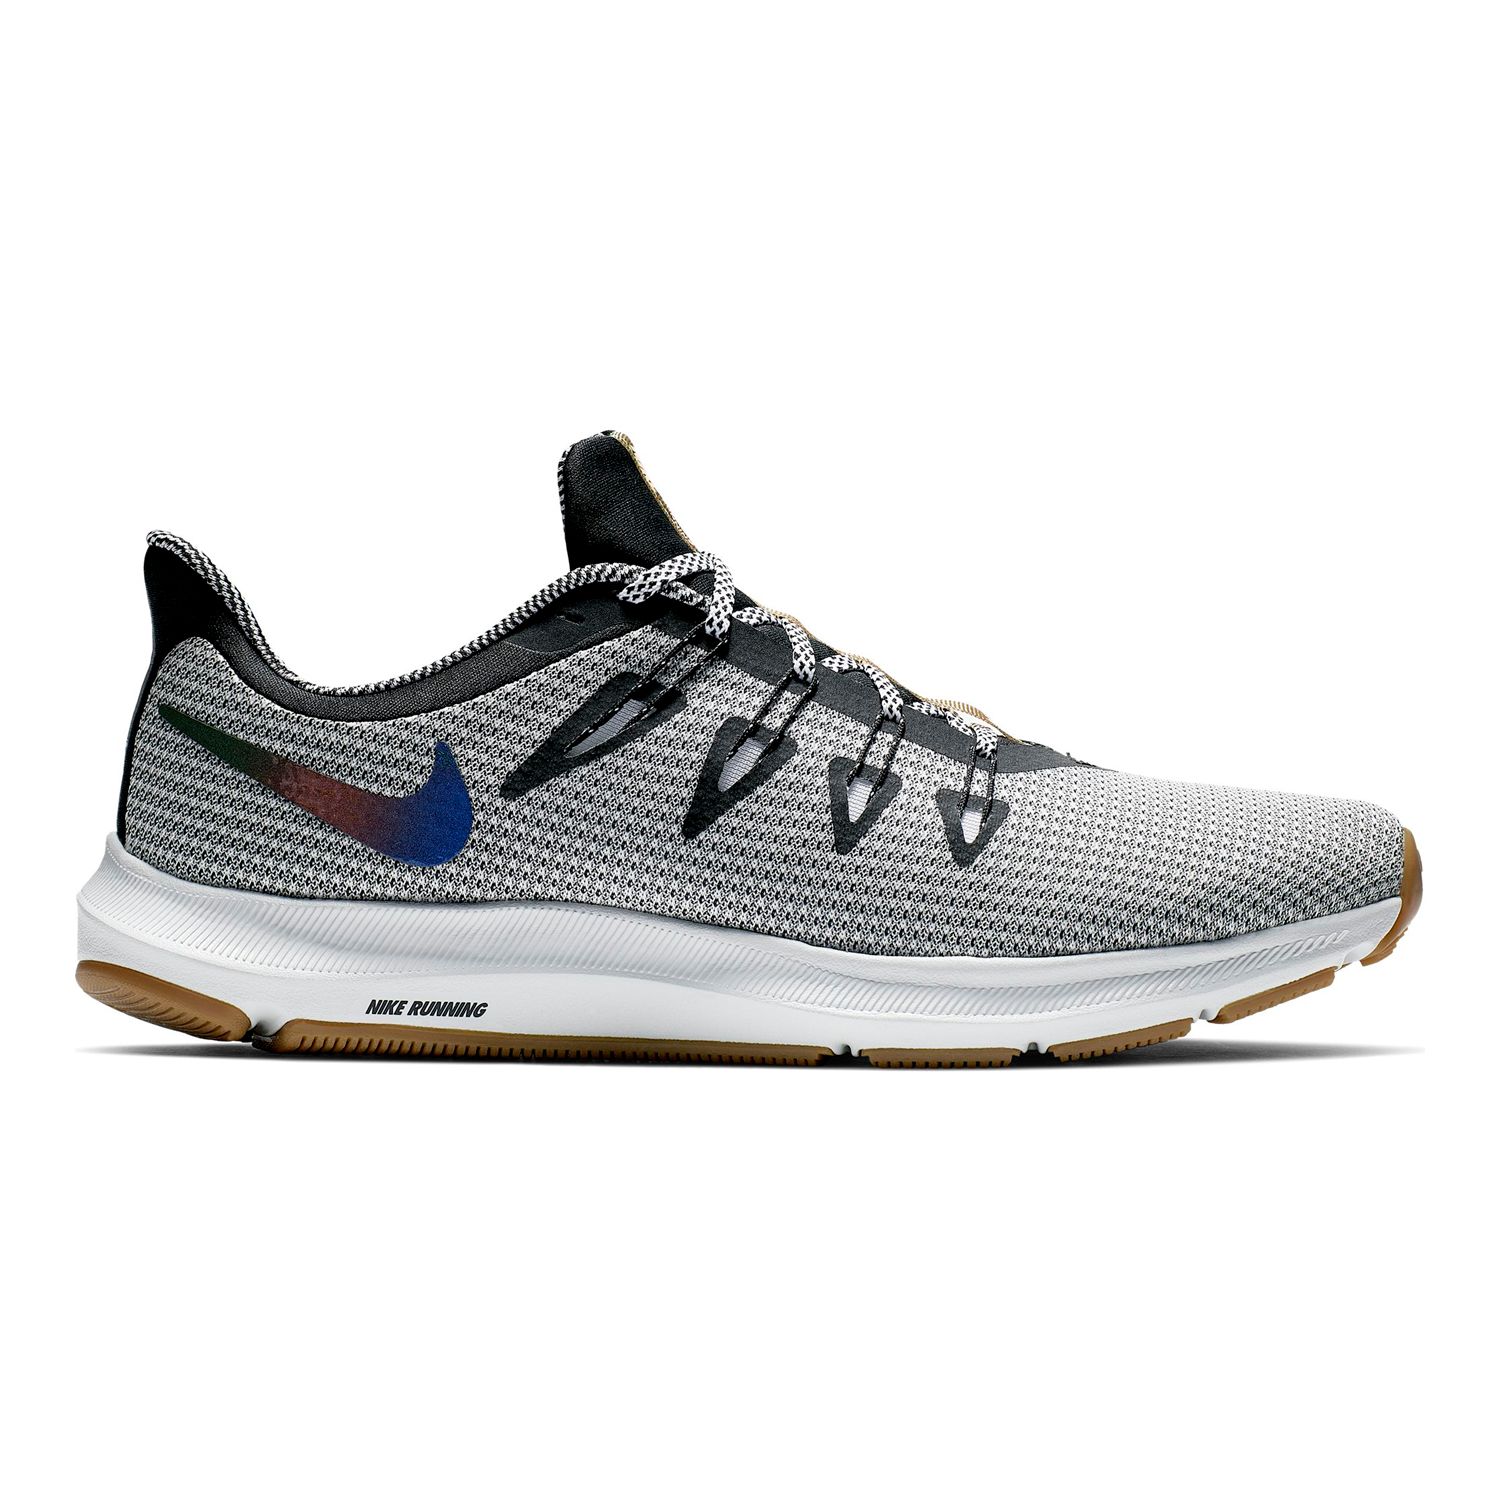 Nike Quest SE Men's Running Shoes